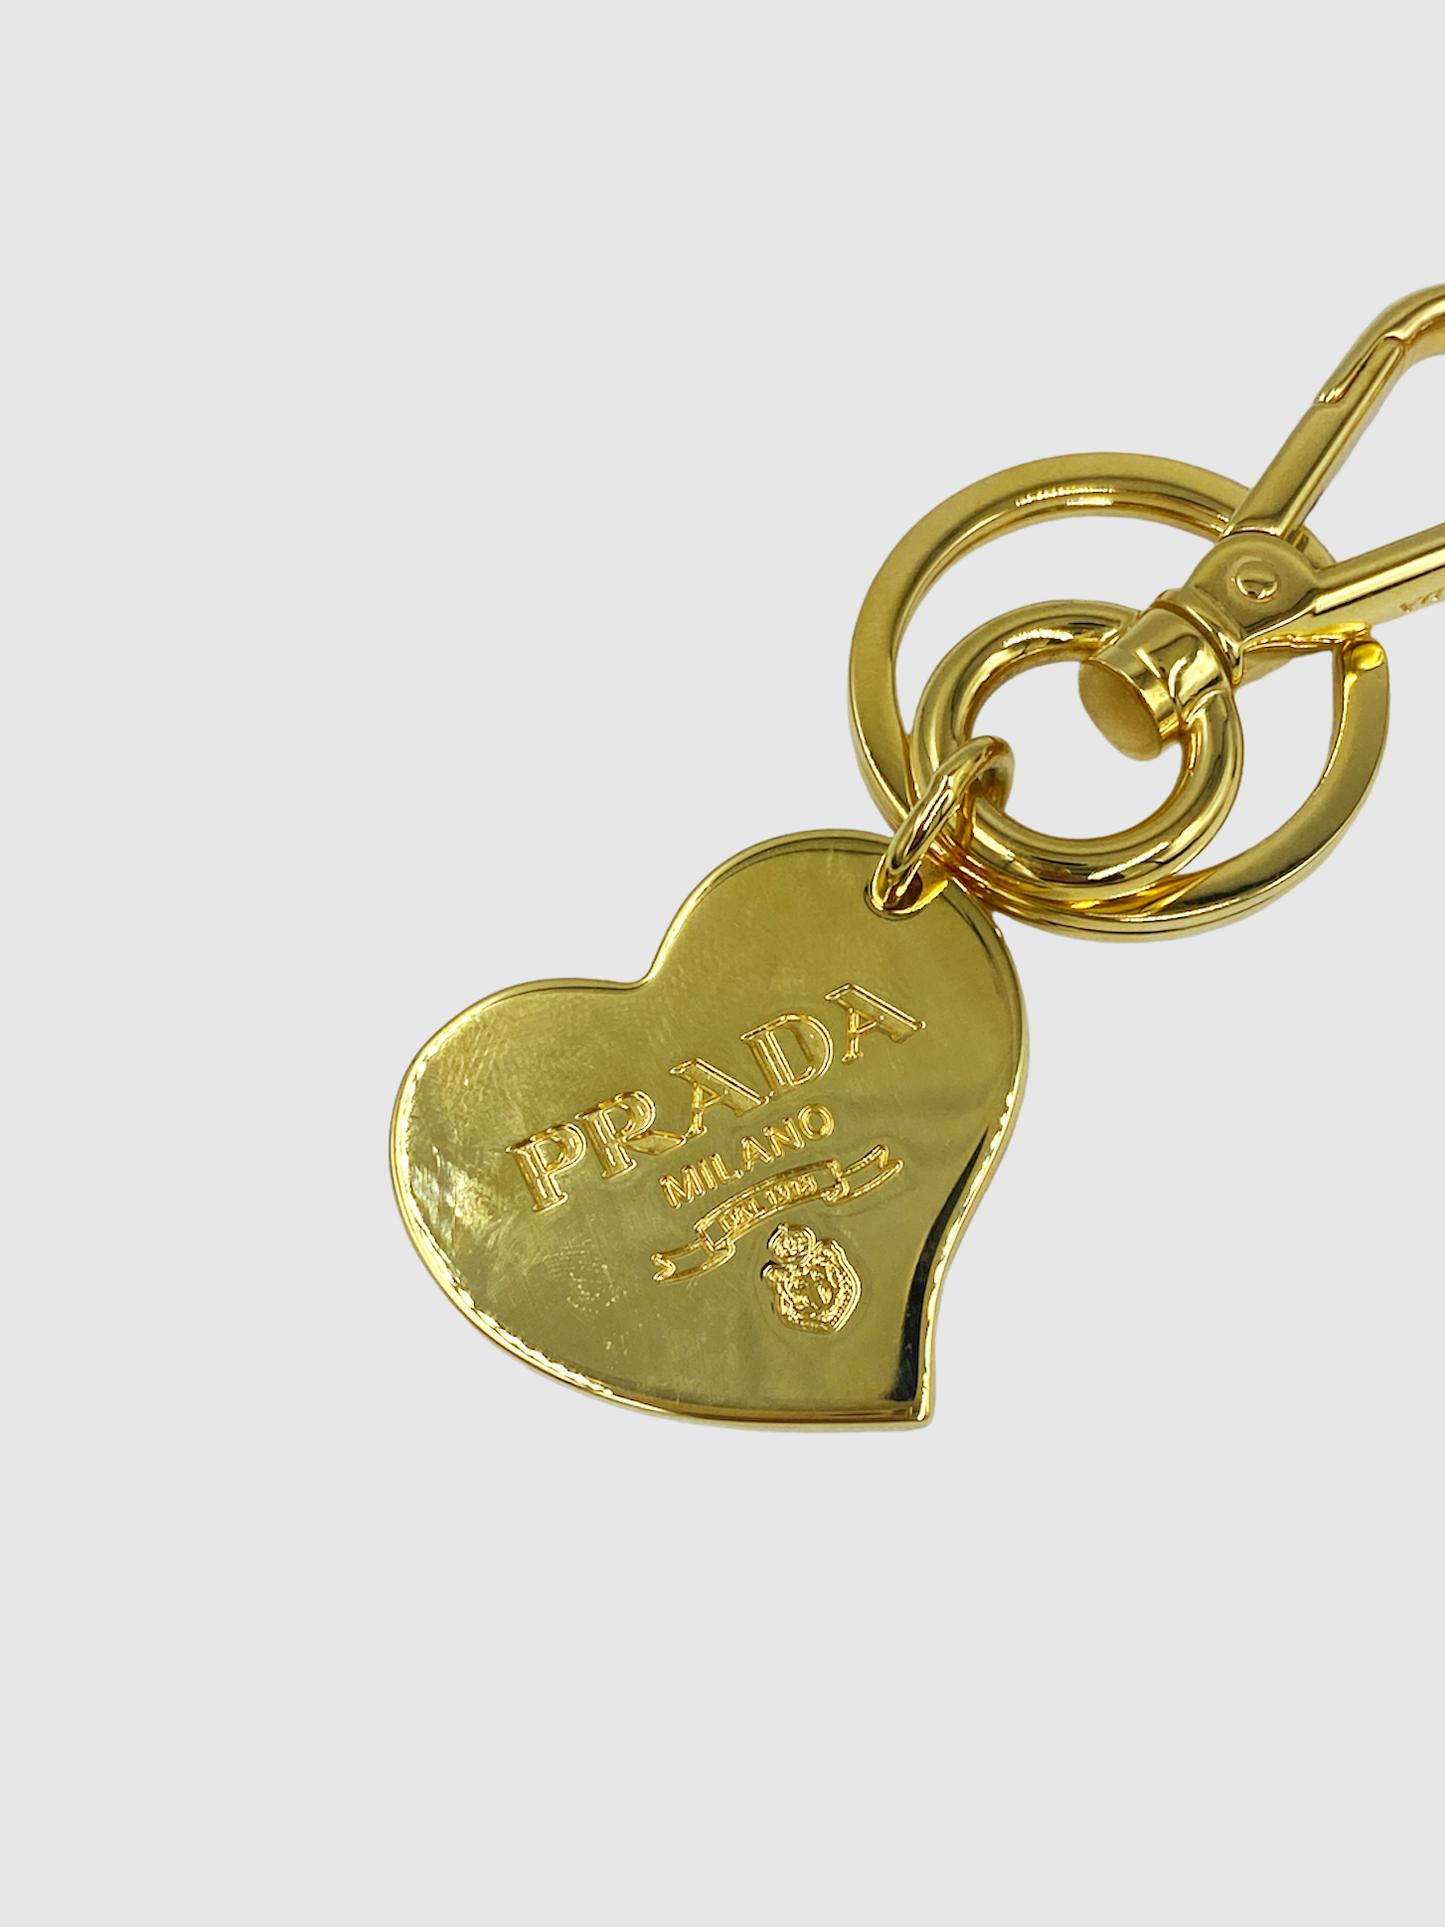 Prada Gold-Tone Heart Tag Key Chain